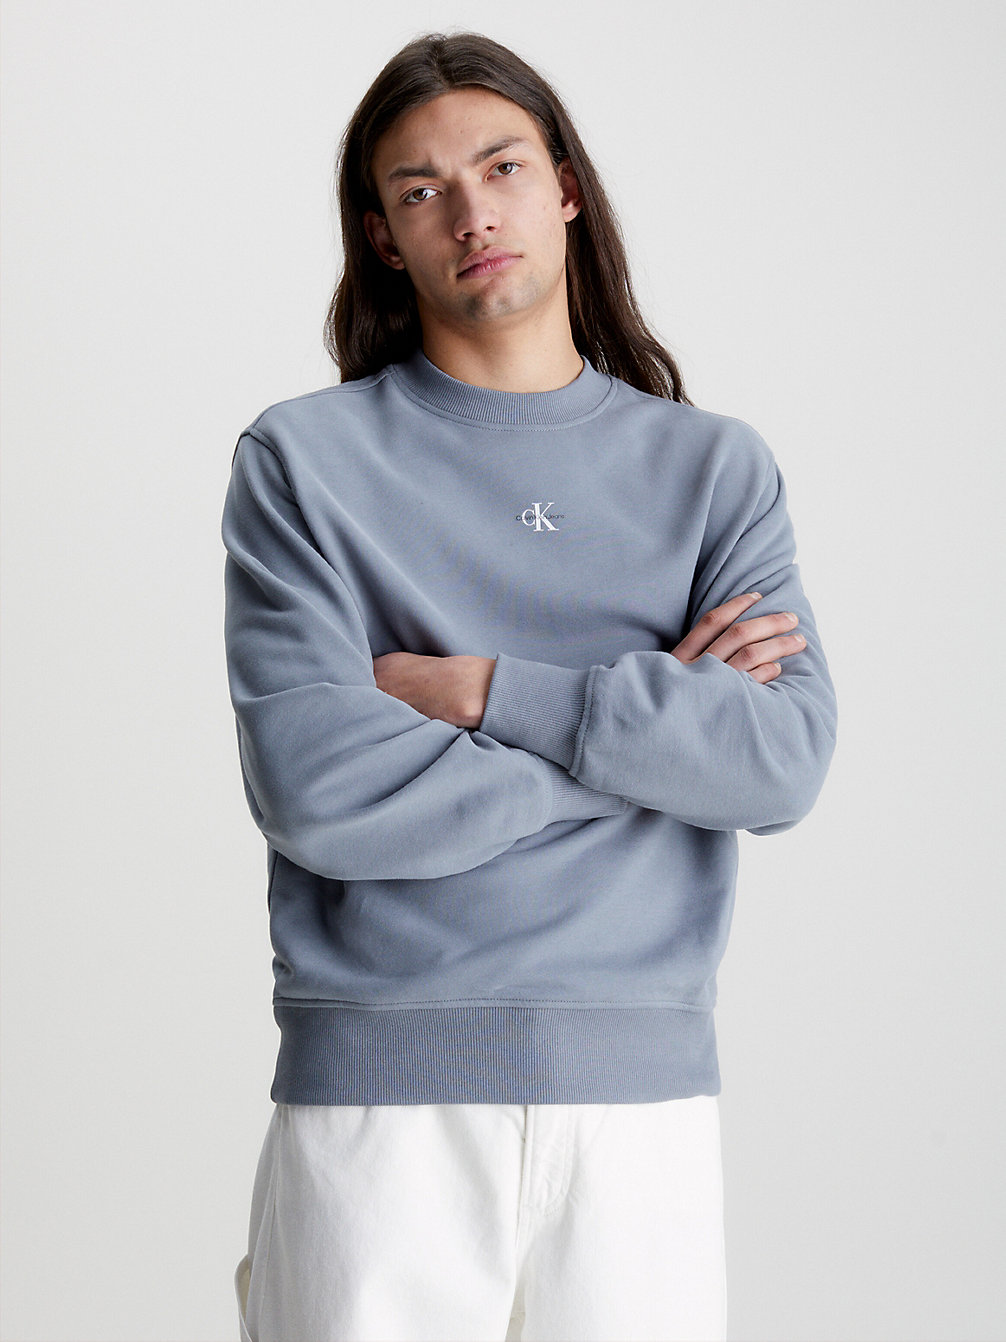 OVERCAST GREY Relaxed Monogram Sweatshirt undefined men Calvin Klein